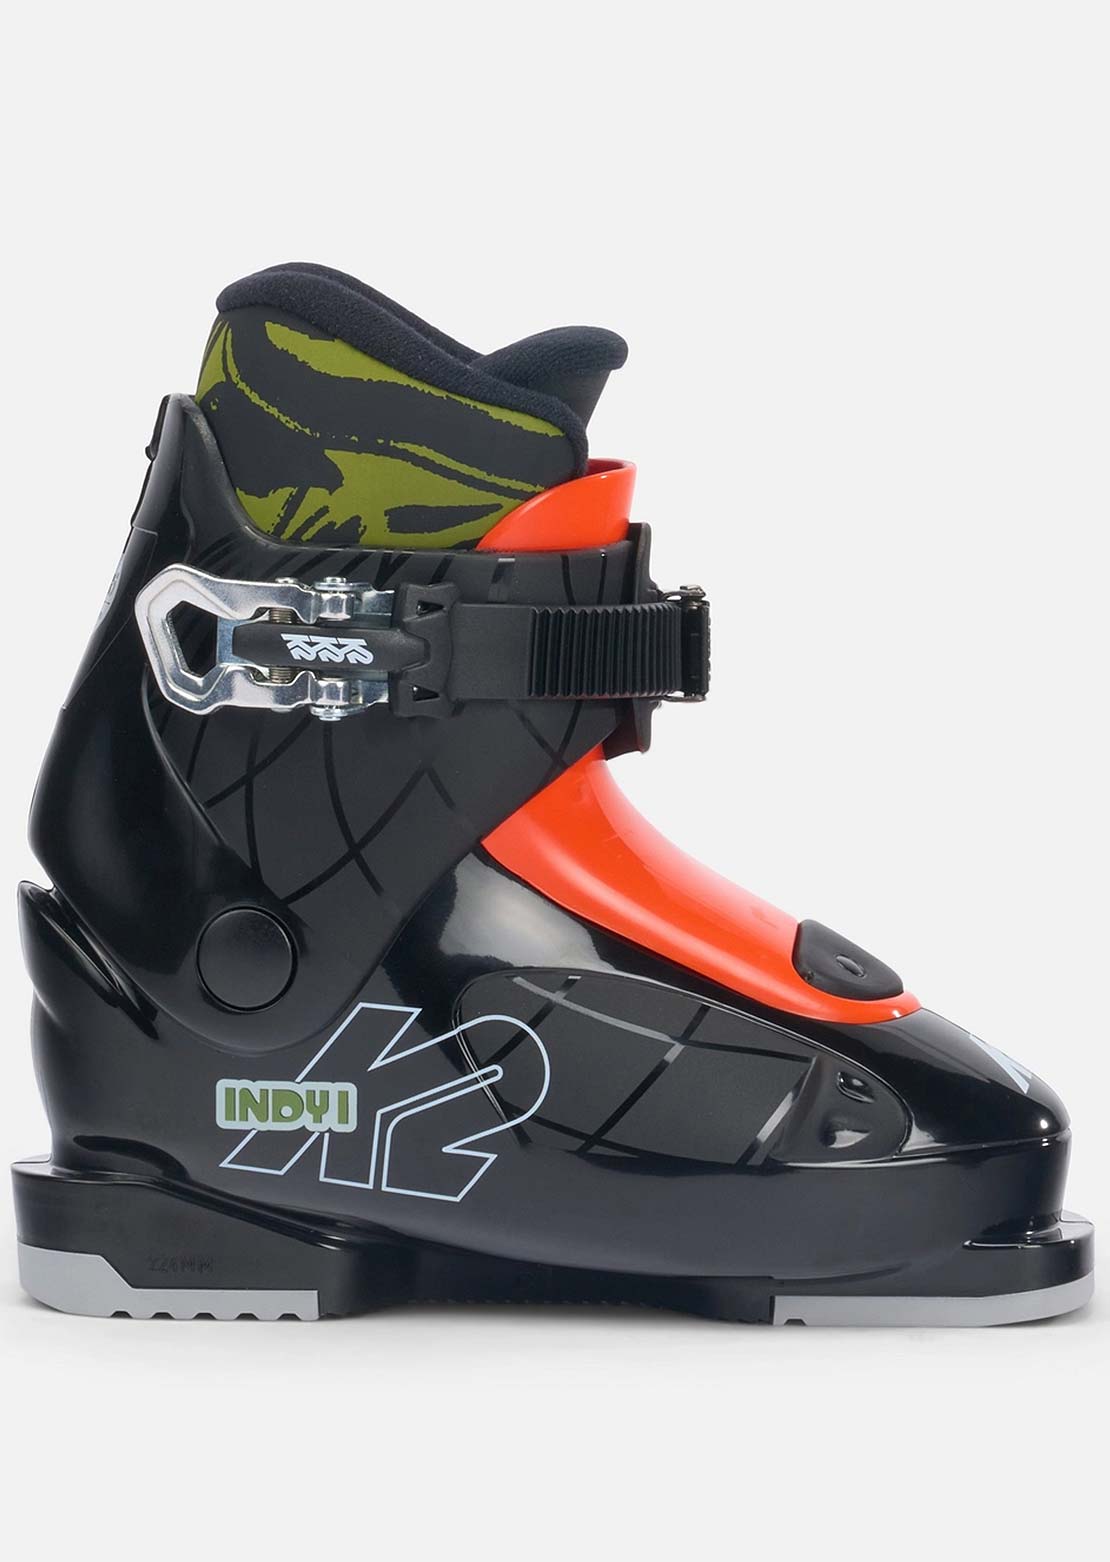 K2 Junior Indy 1 Ski Boots